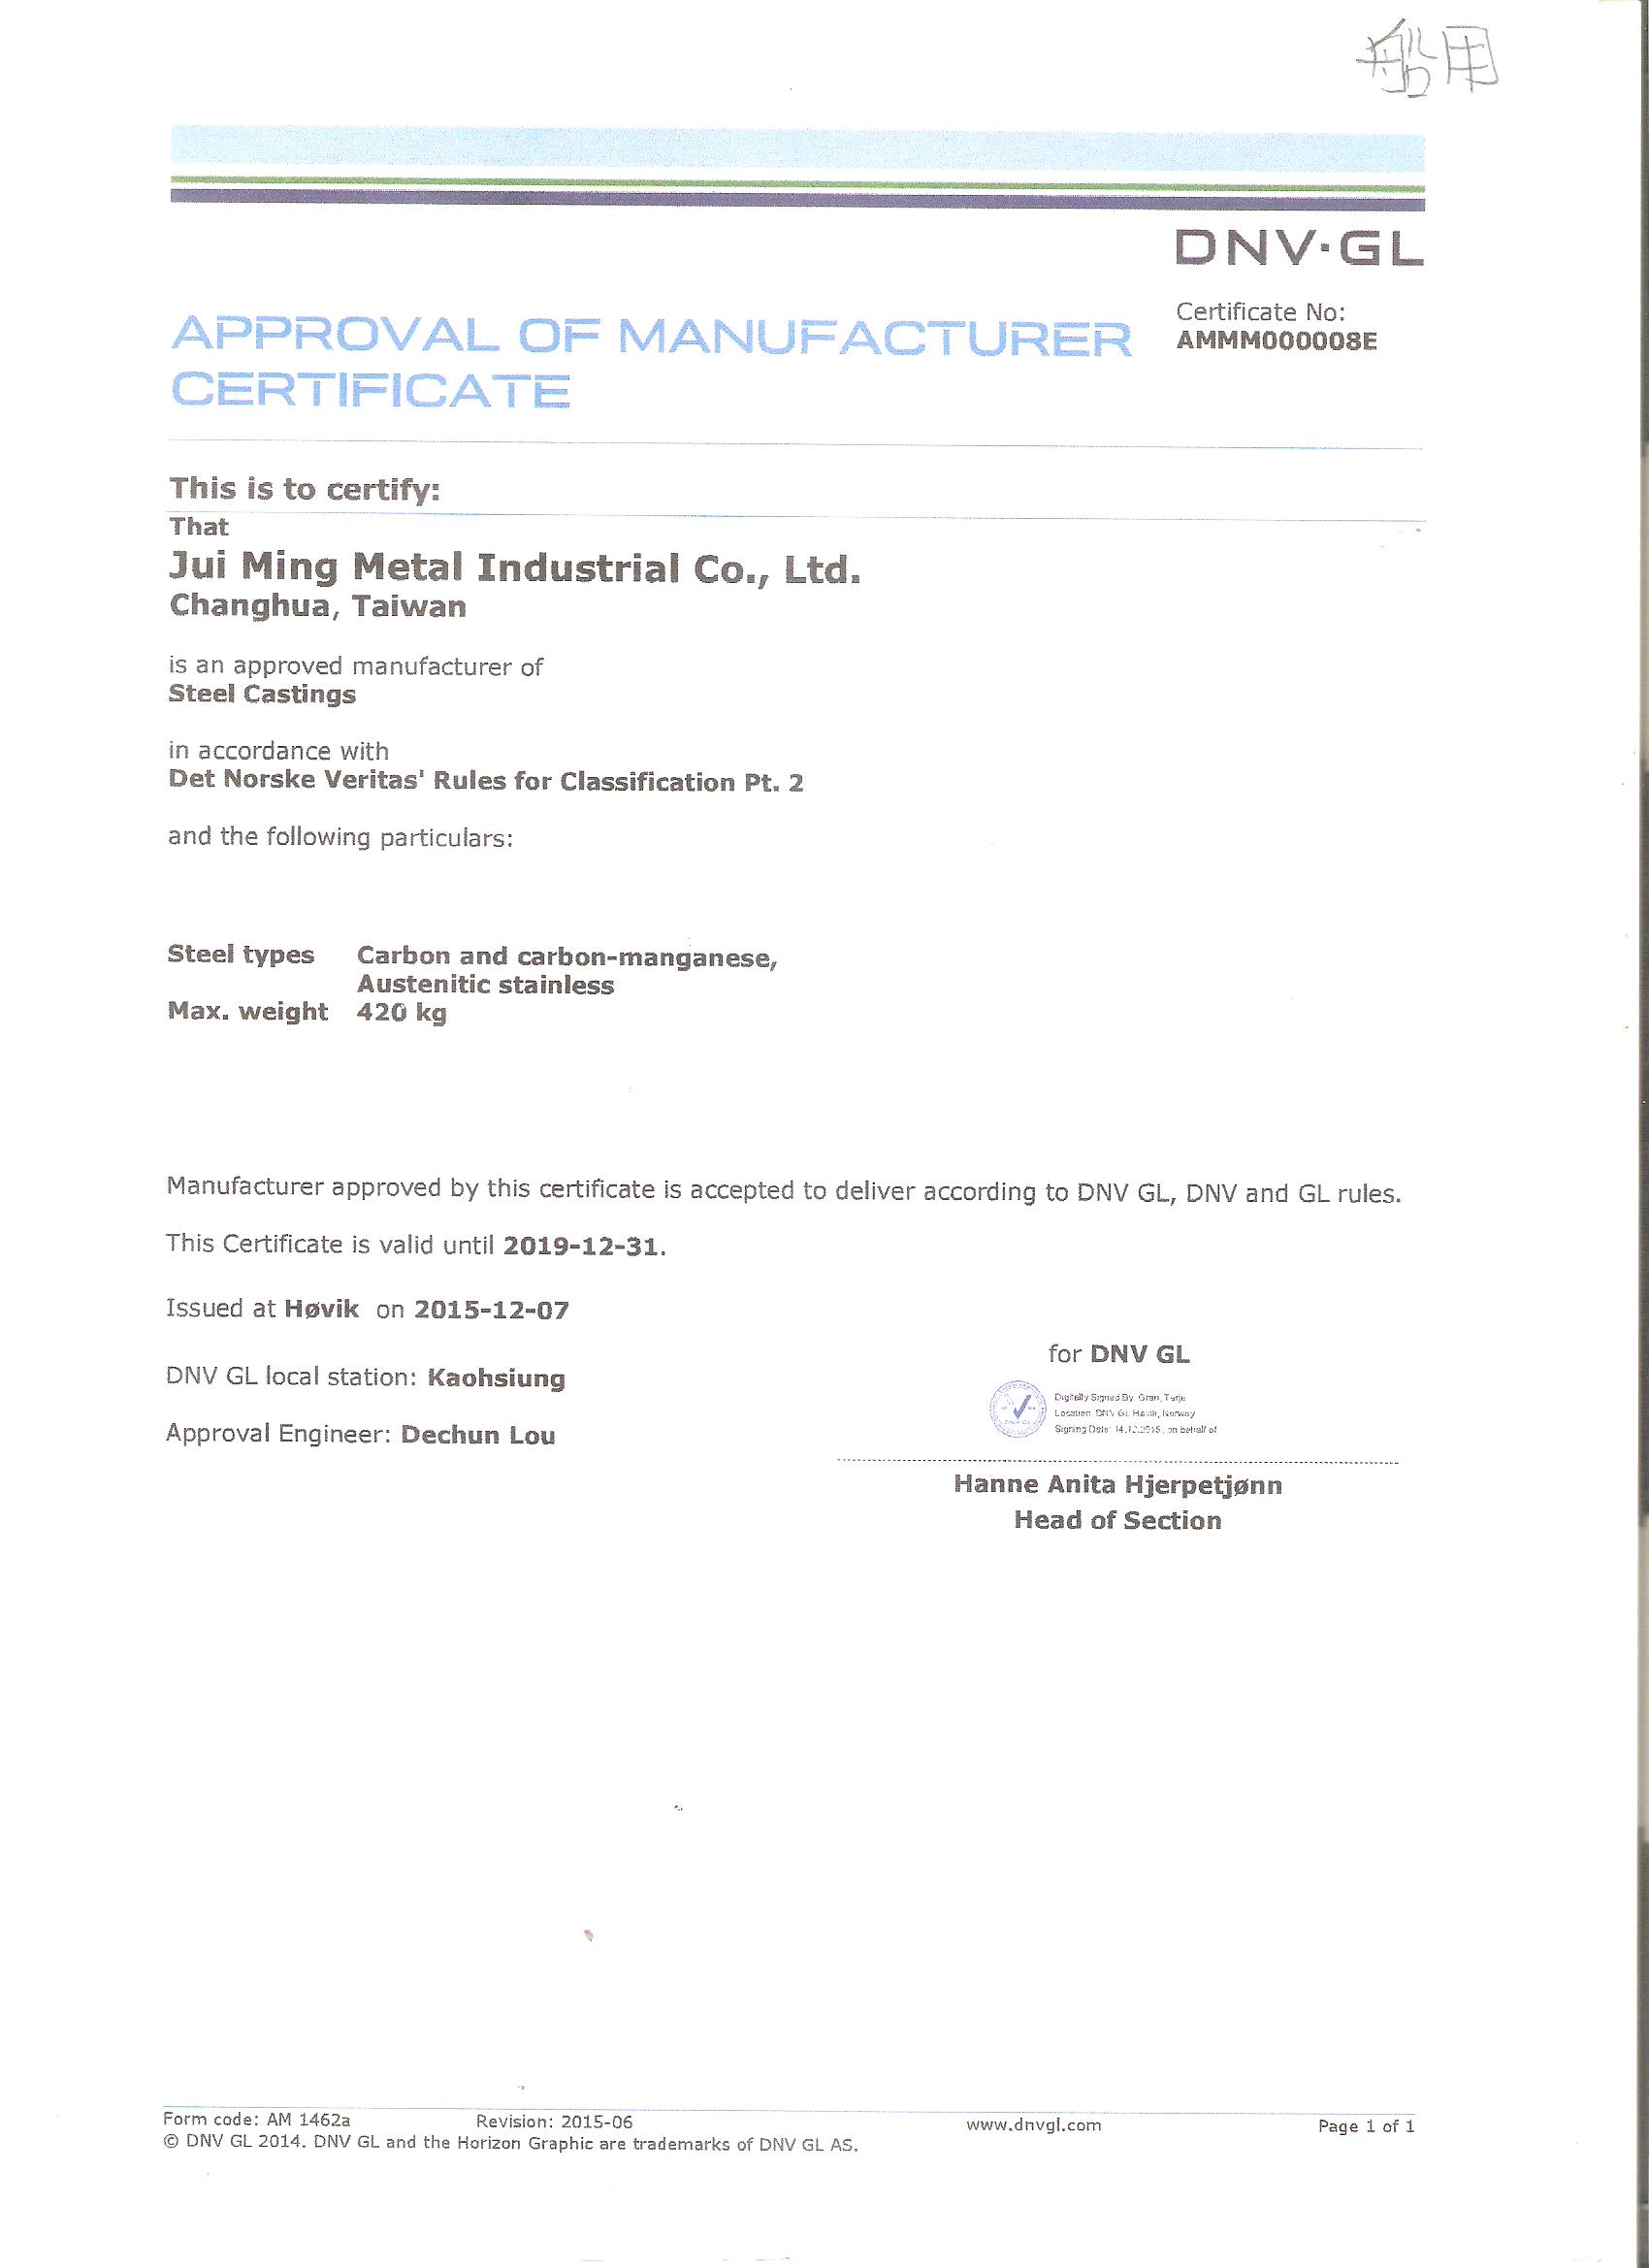 proimages/certificate/DNV.GL 船用證書.jpeg